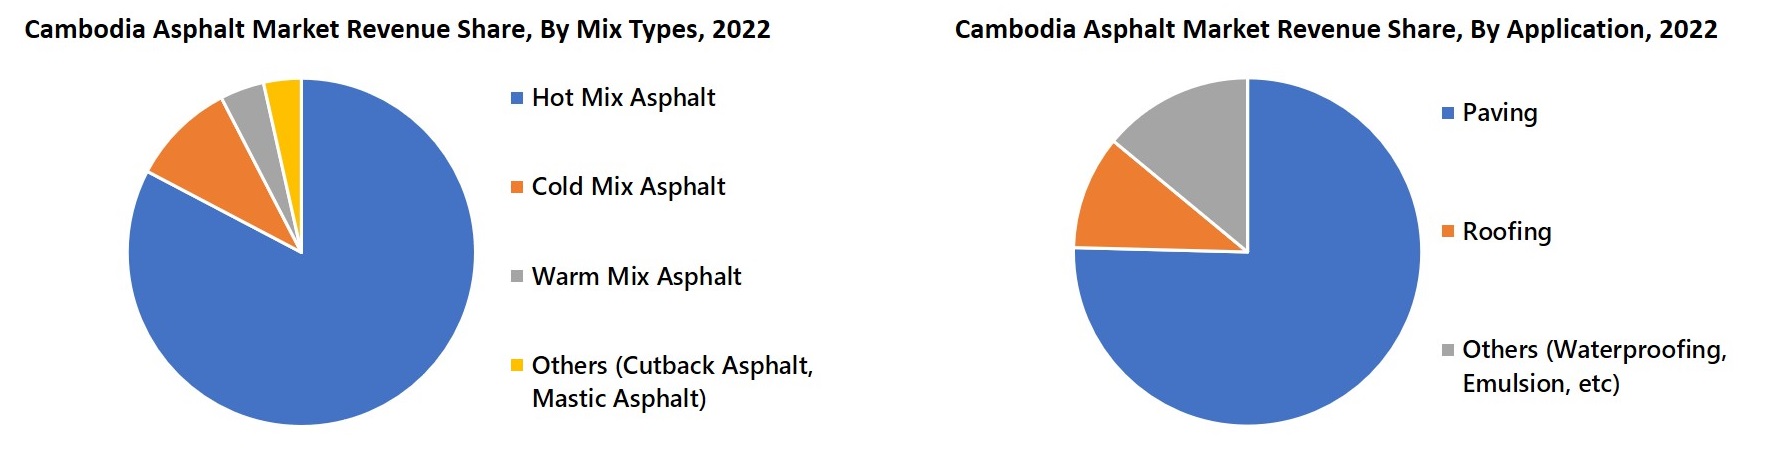 Cambodia Asphalt Market Revenue Share